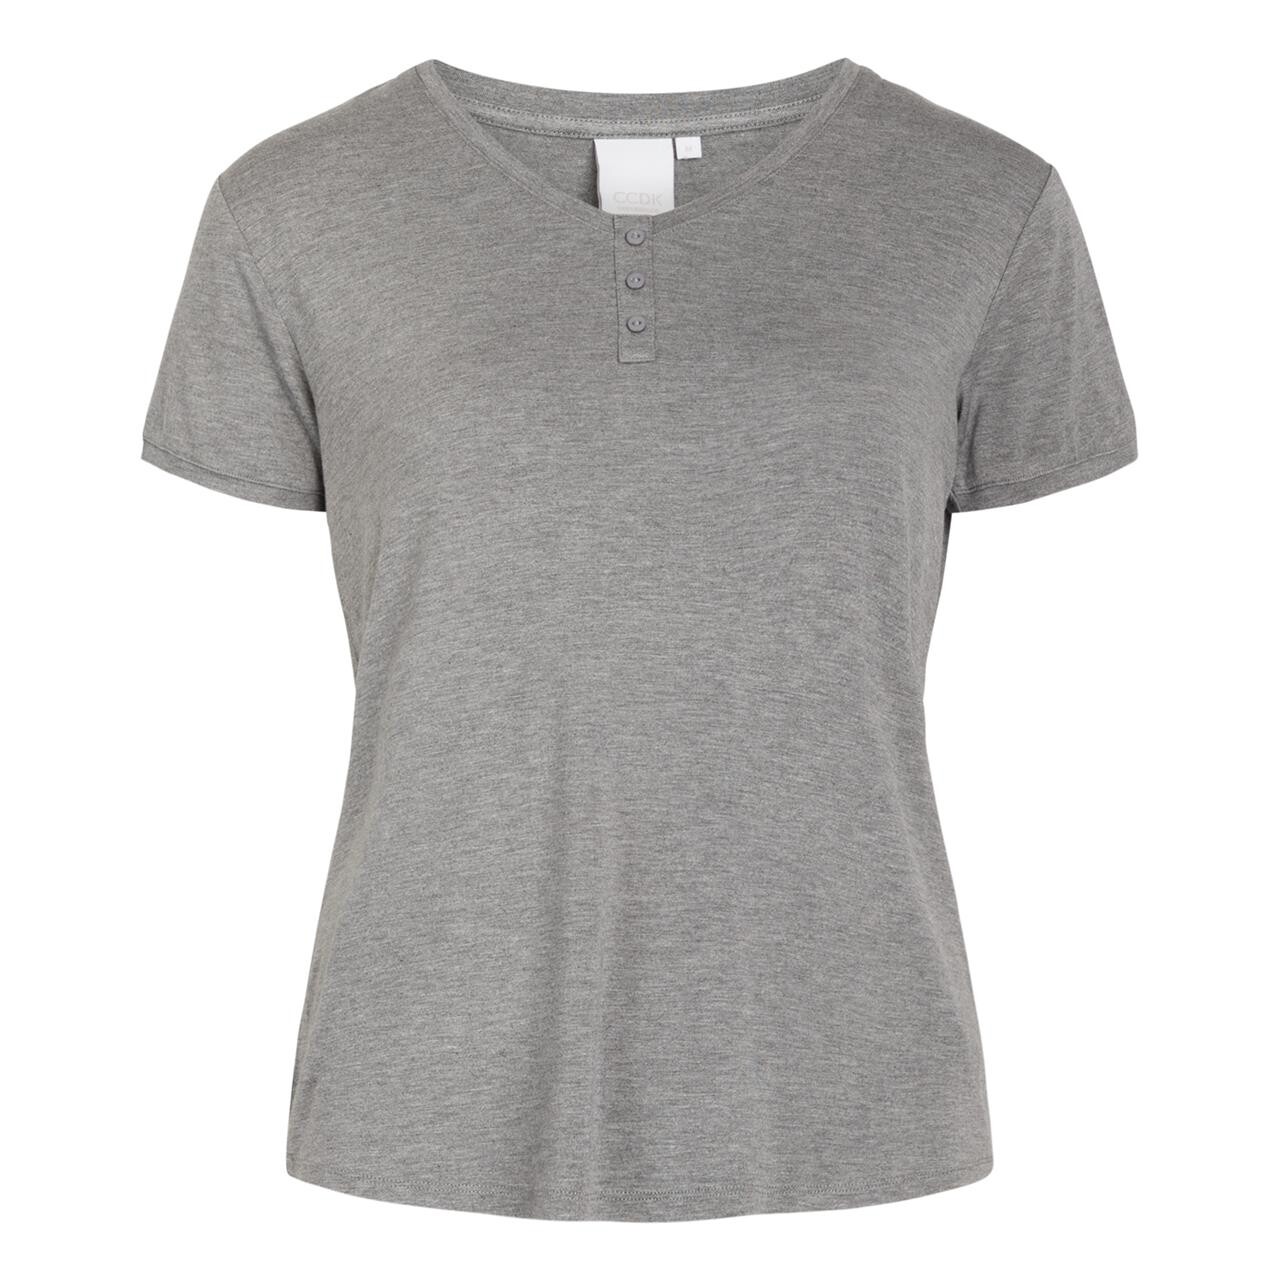 Ccdk Jordan T-shirt, Farbe: Grau, Größe: L, Damen von CCDK